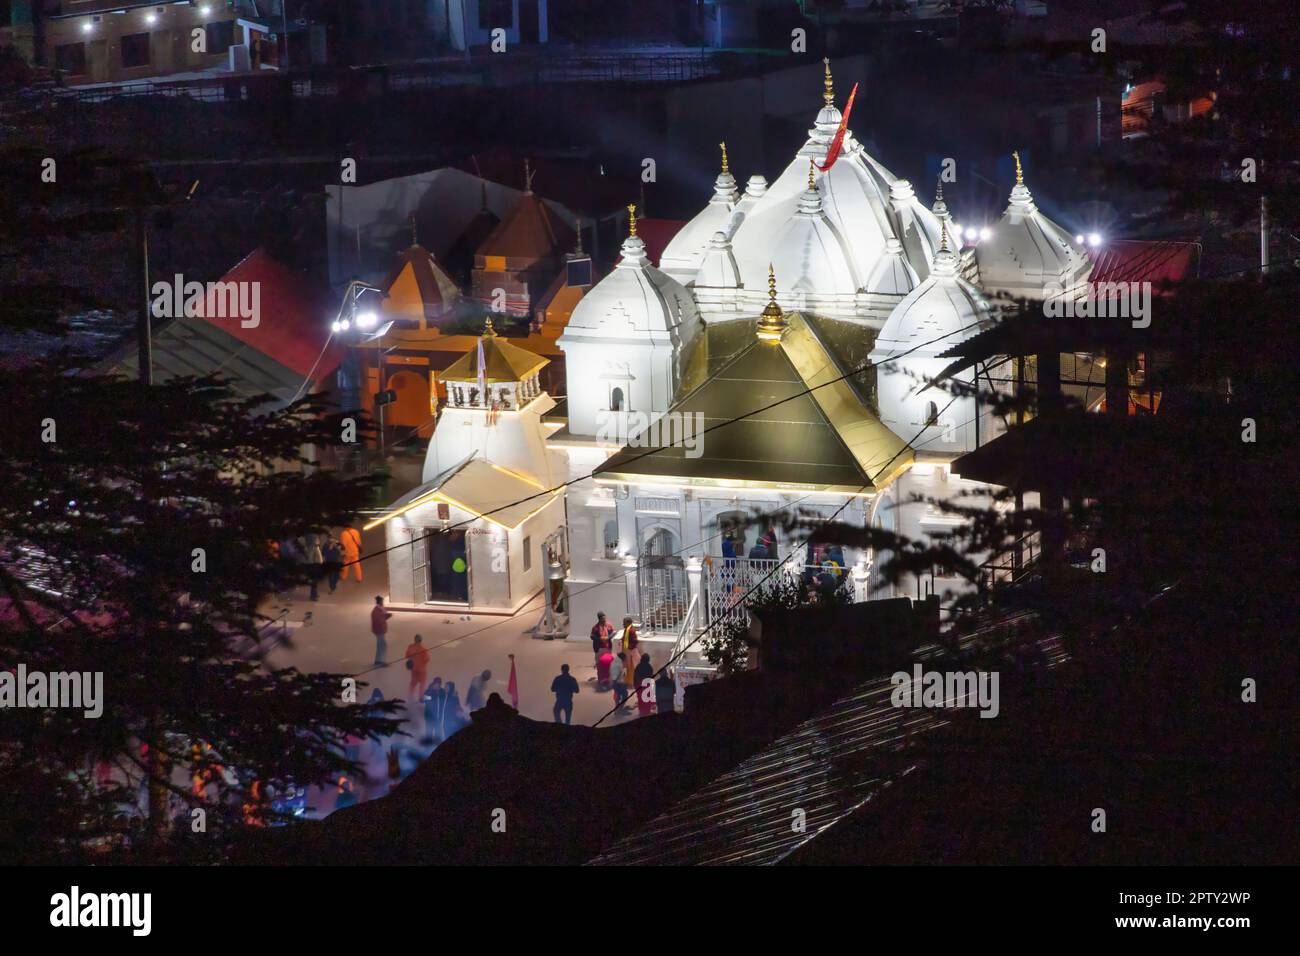 India, Uttarakhand, Gangri. Himalaya. Sito di pellegrinaggio. Fiume Bhagirathi, fonte di Ganga, fiume Ganges. Tempio di notte. Foto Stock